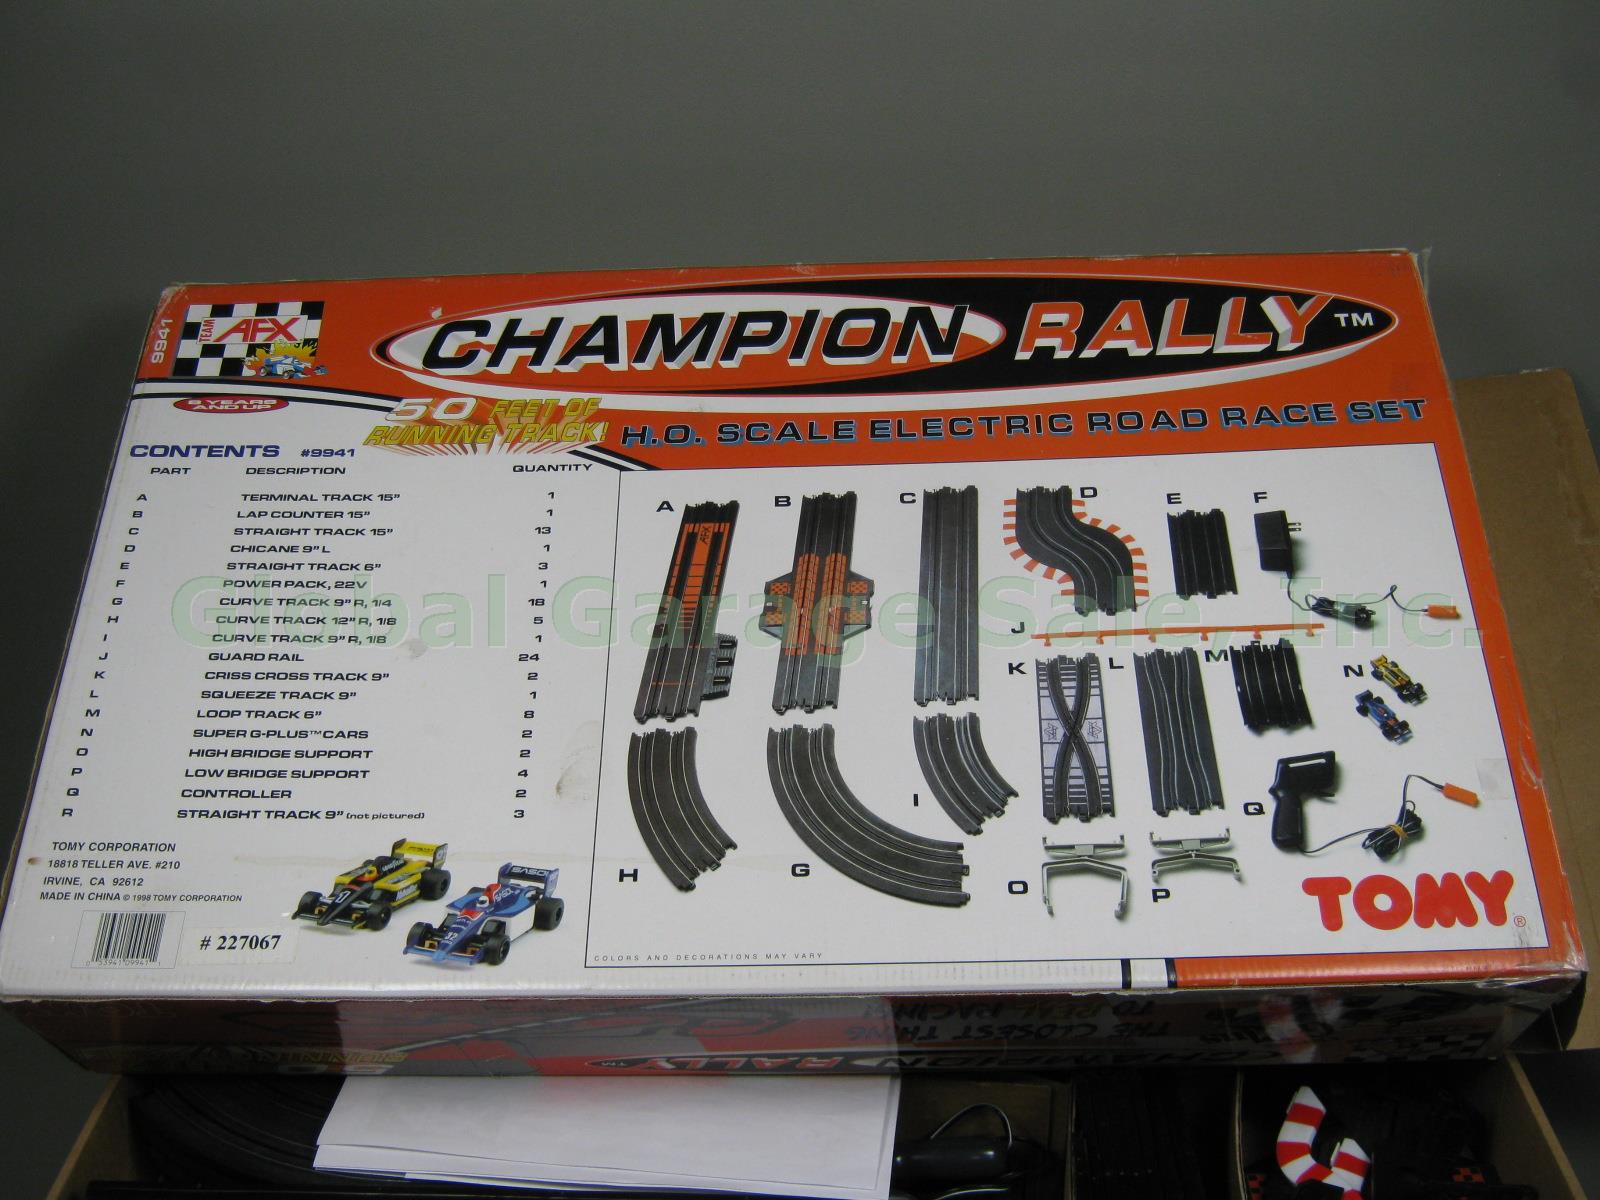 Tomy Team AFX Super G Plus Champion Rally Electric Slot Car Race Track Set #9941 4